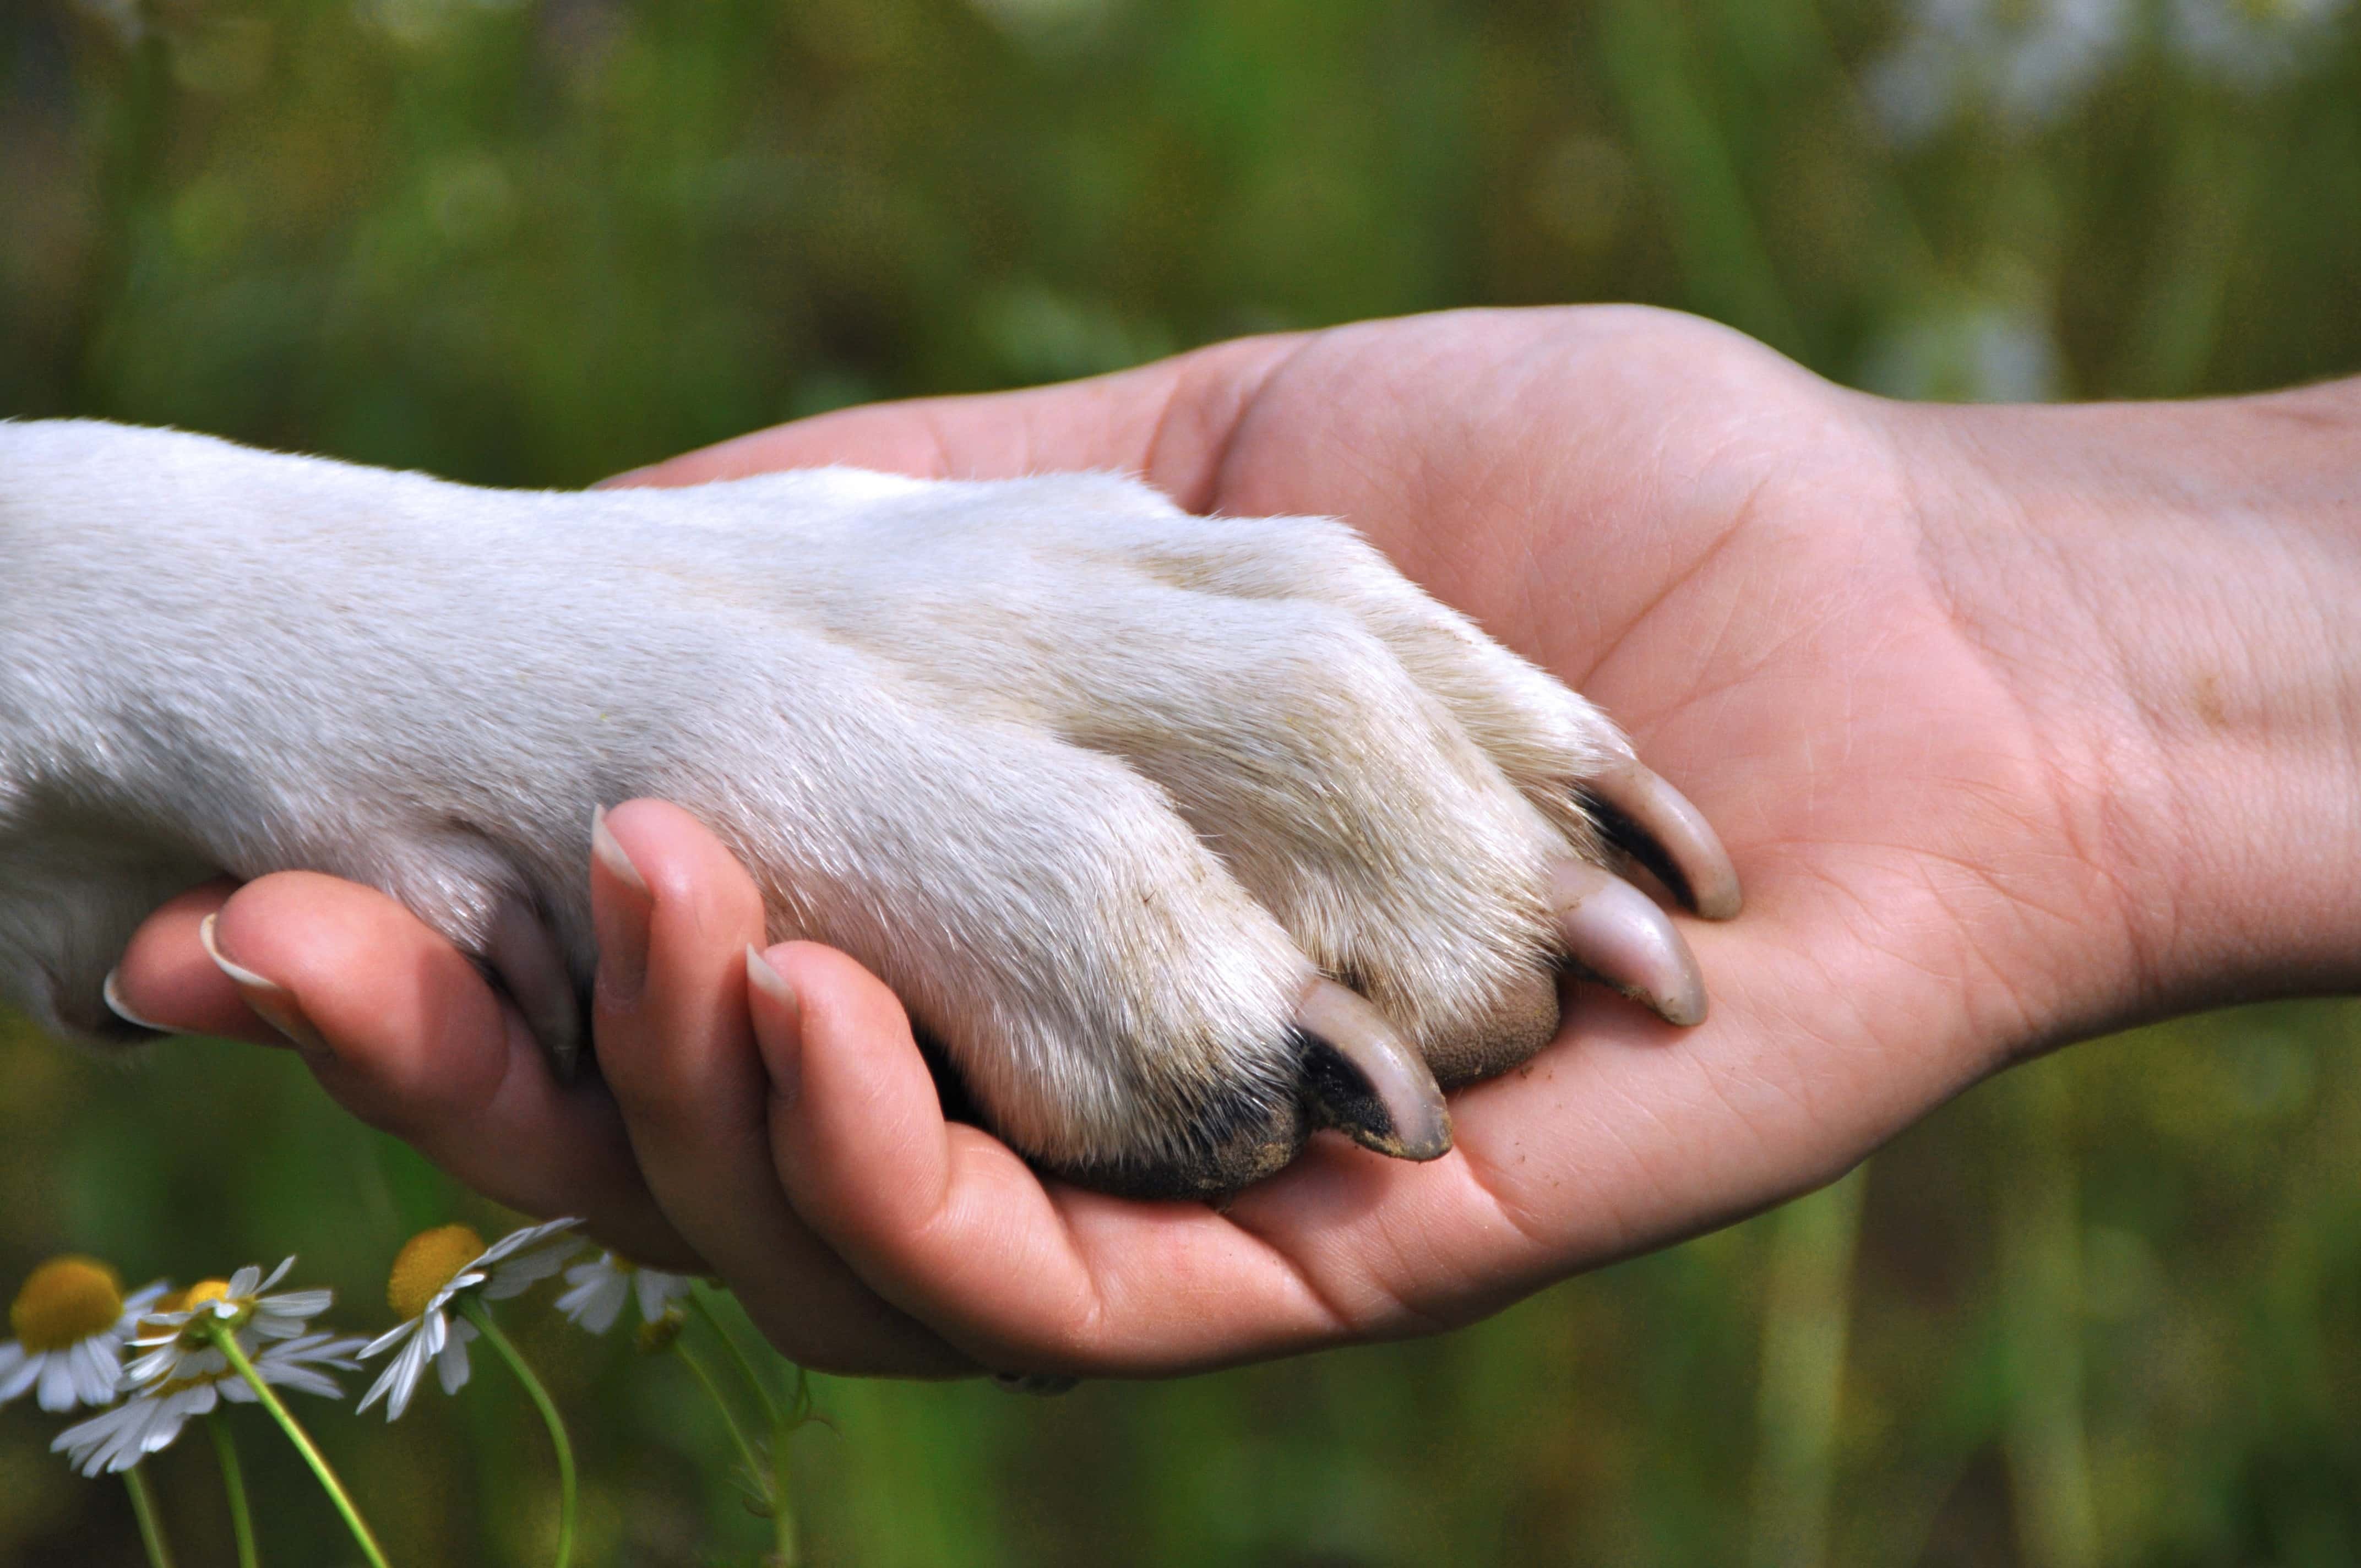 Рука шавка. Собачья лапа и рука человека. Лапа собаки и рука человека. Собака друг человека. Дружба собаки и человека.